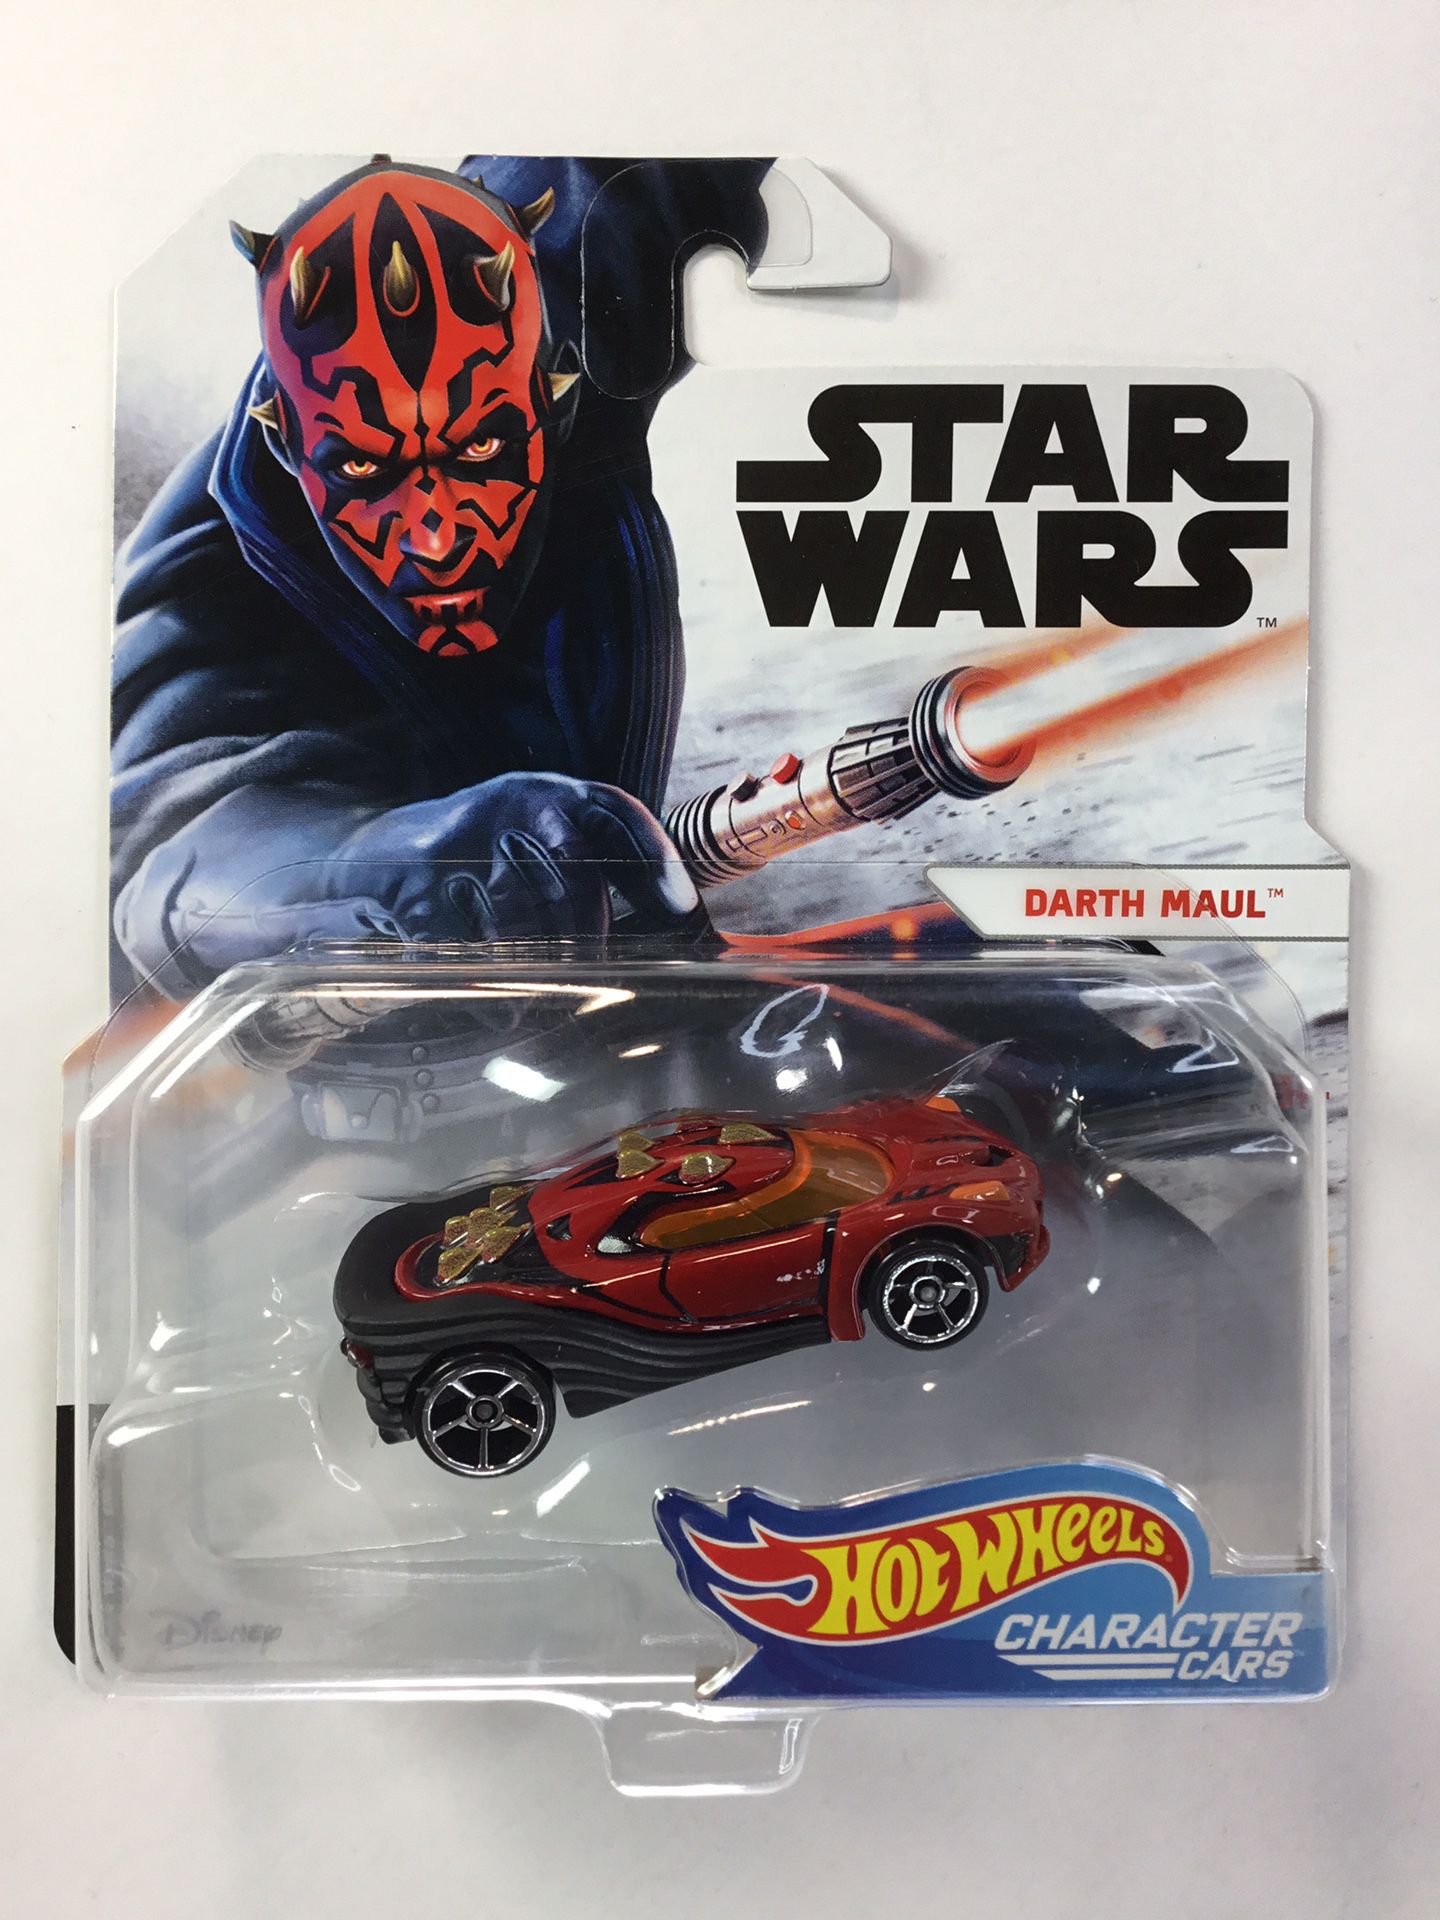 Star Wars Darth Maul Hot Wheels Character Cars